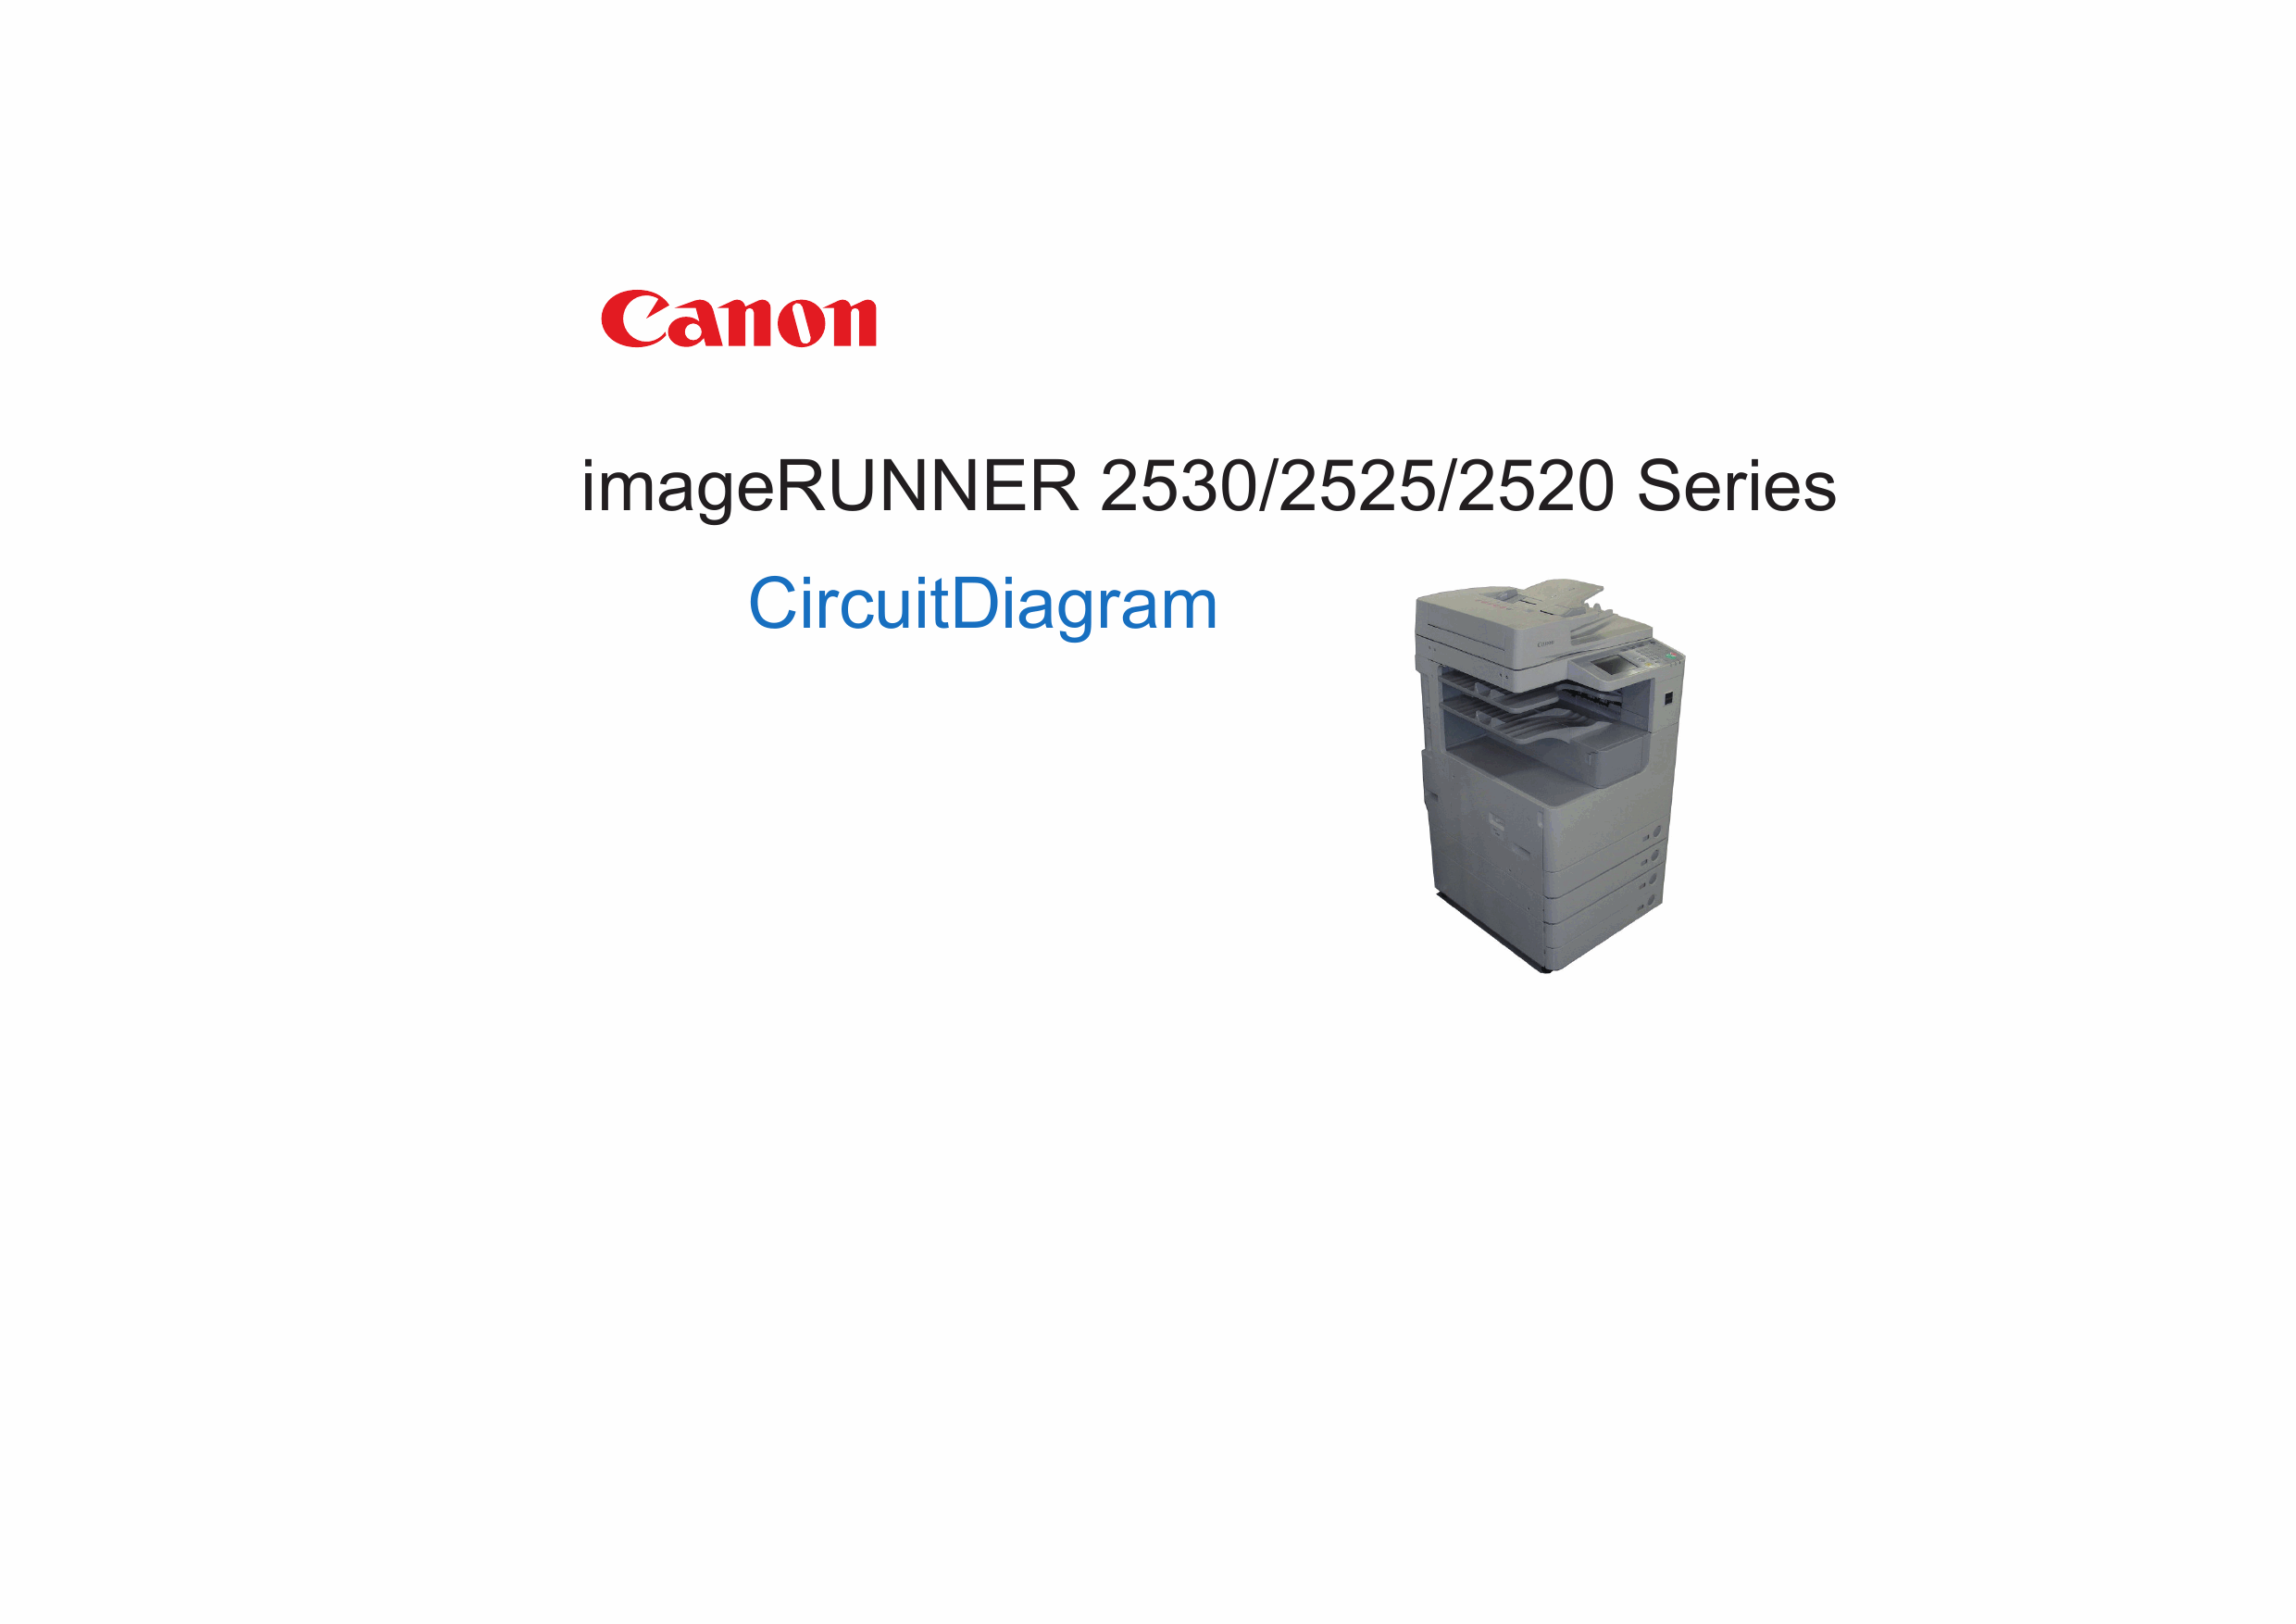 Canon imageRUNNER-iR 2520 2525 2530 Circuit Diagram-1